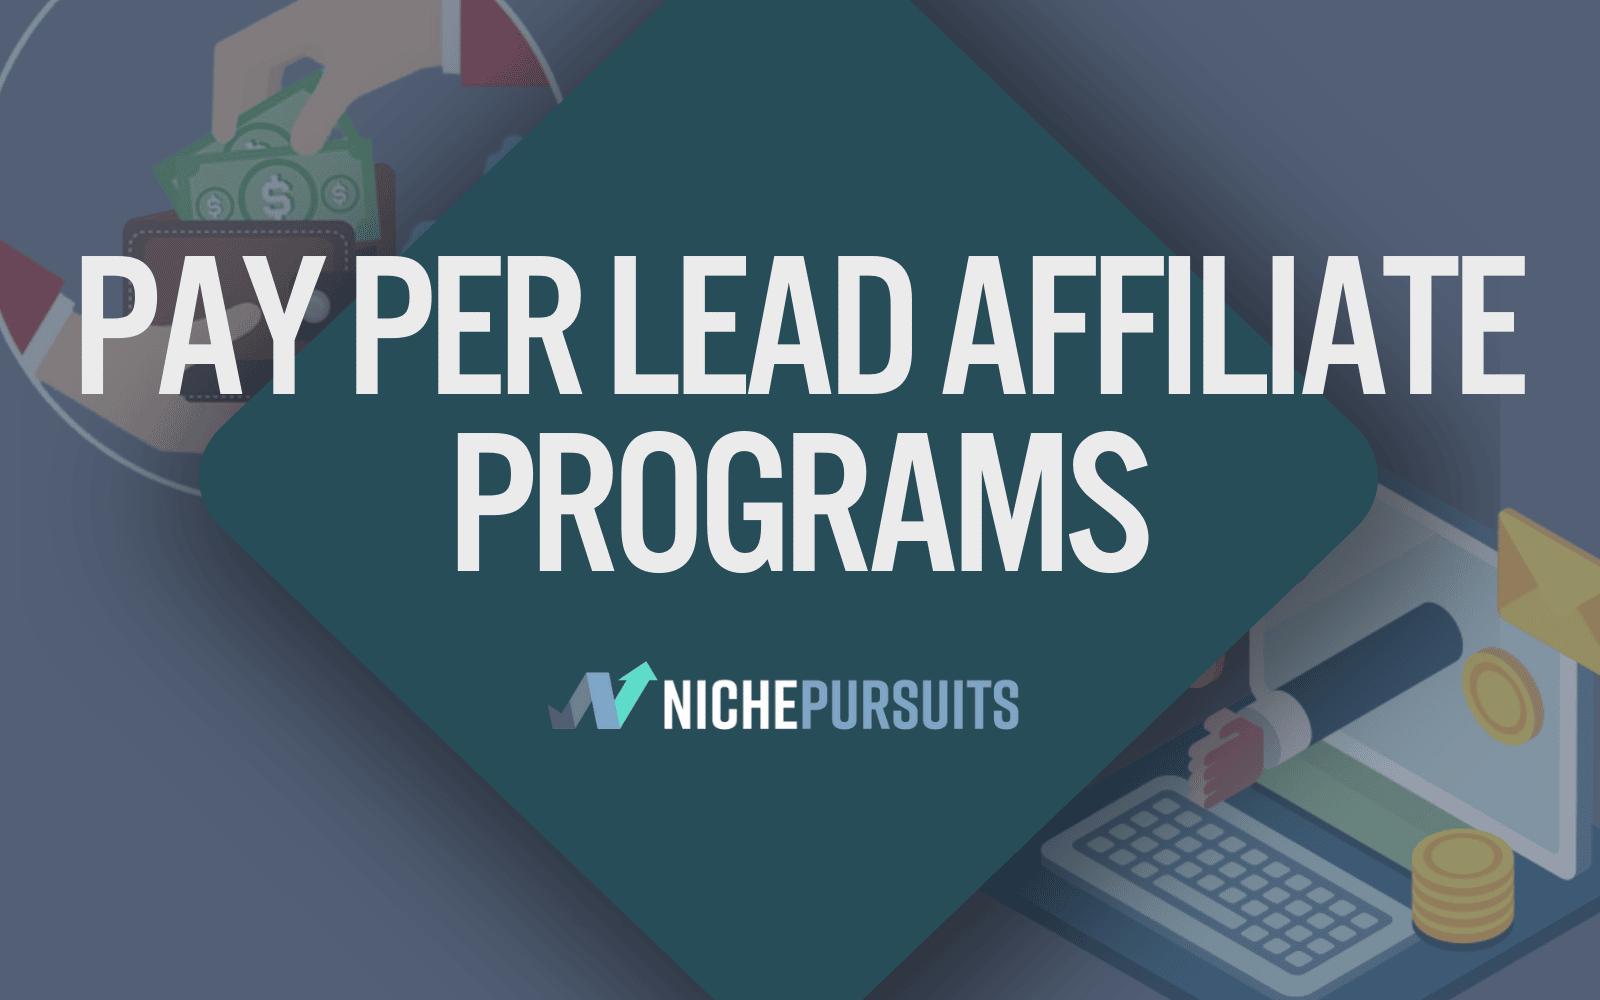 Pay-per-lead (PPL) affiliate programs